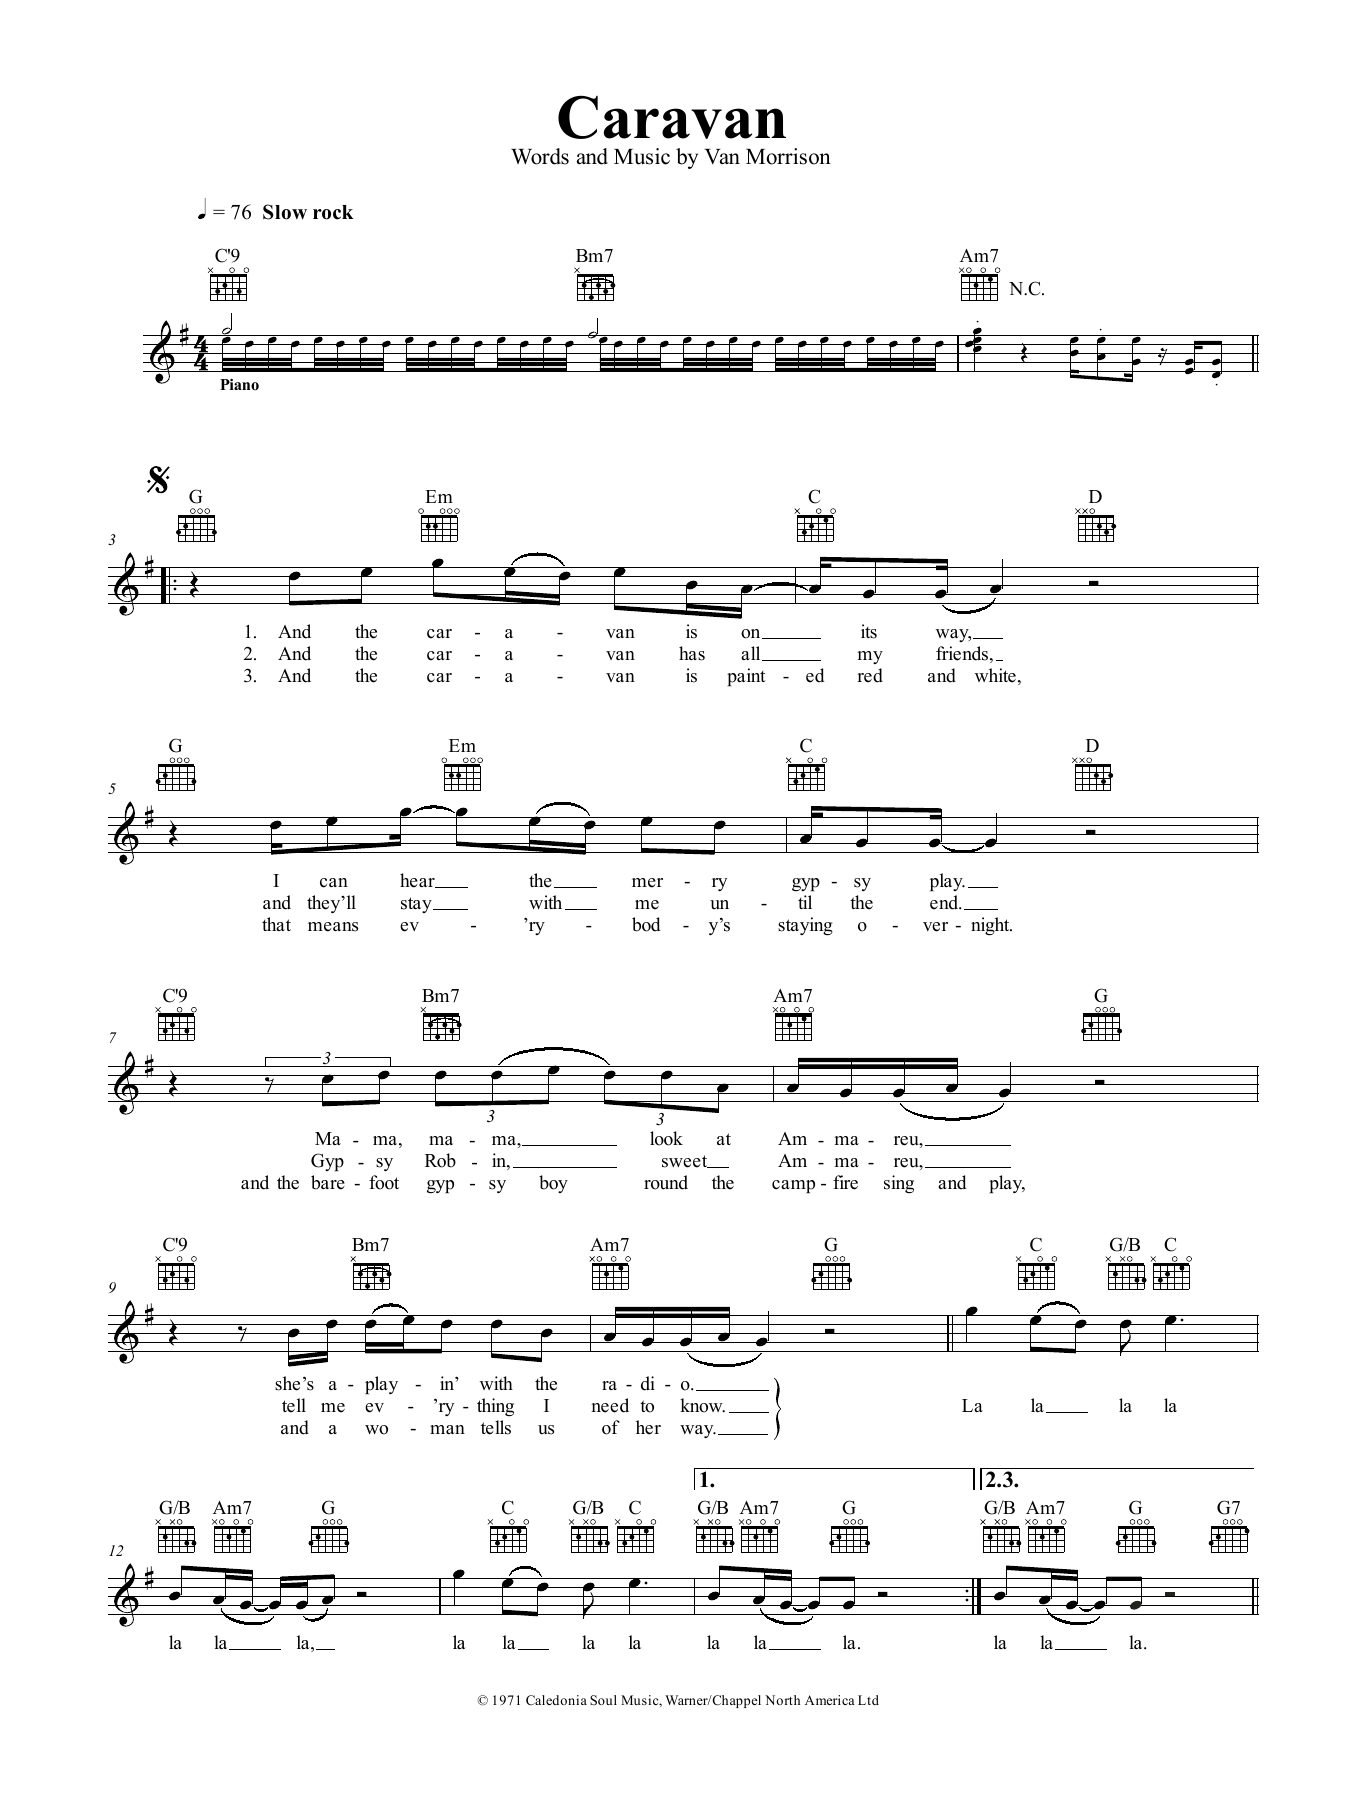 Download Van Morrison Caravan Sheet Music and learn how to play Lead Sheet / Fake Book PDF digital score in minutes